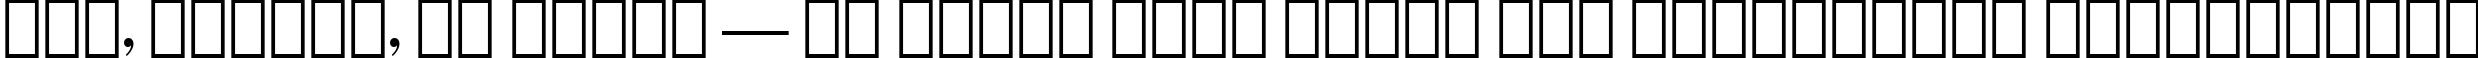 Пример написания шрифтом Bodoni Bold Condensed BT текста на украинском